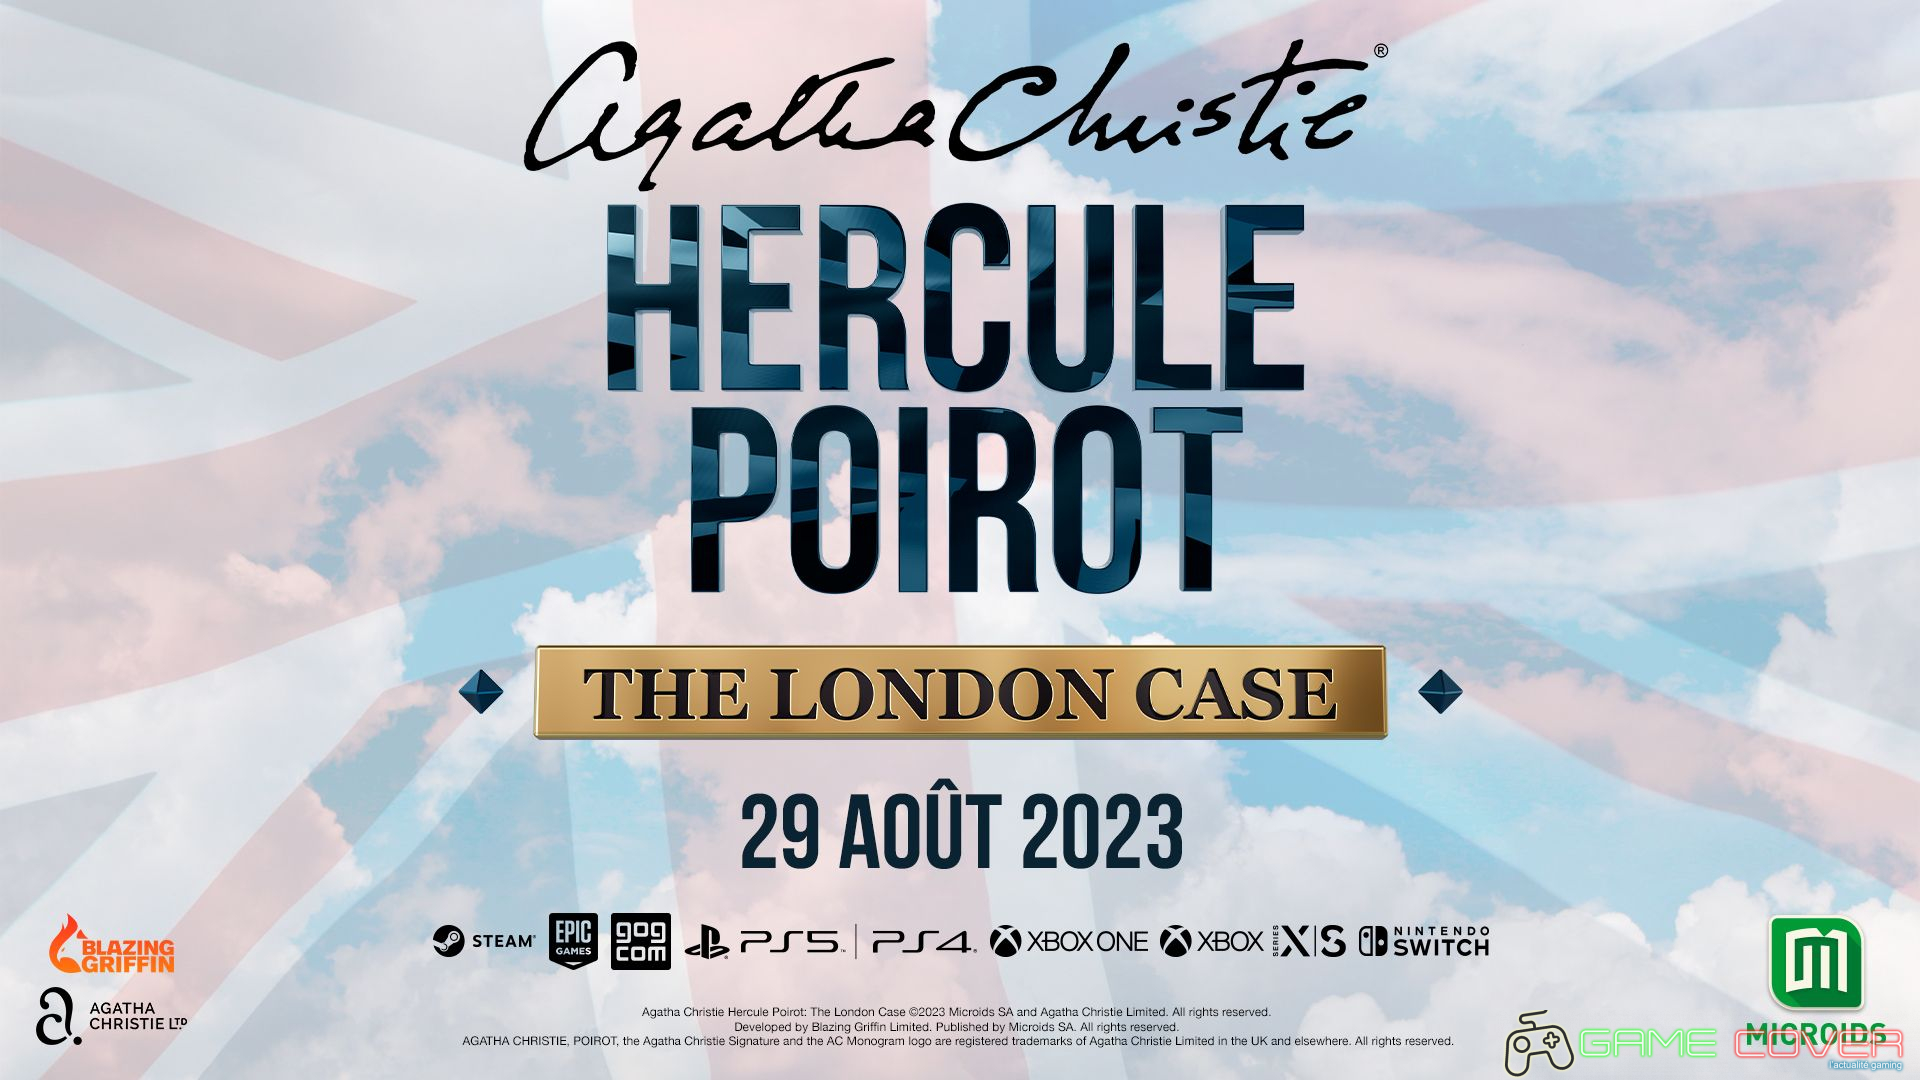 Hercule Poirot The London Case